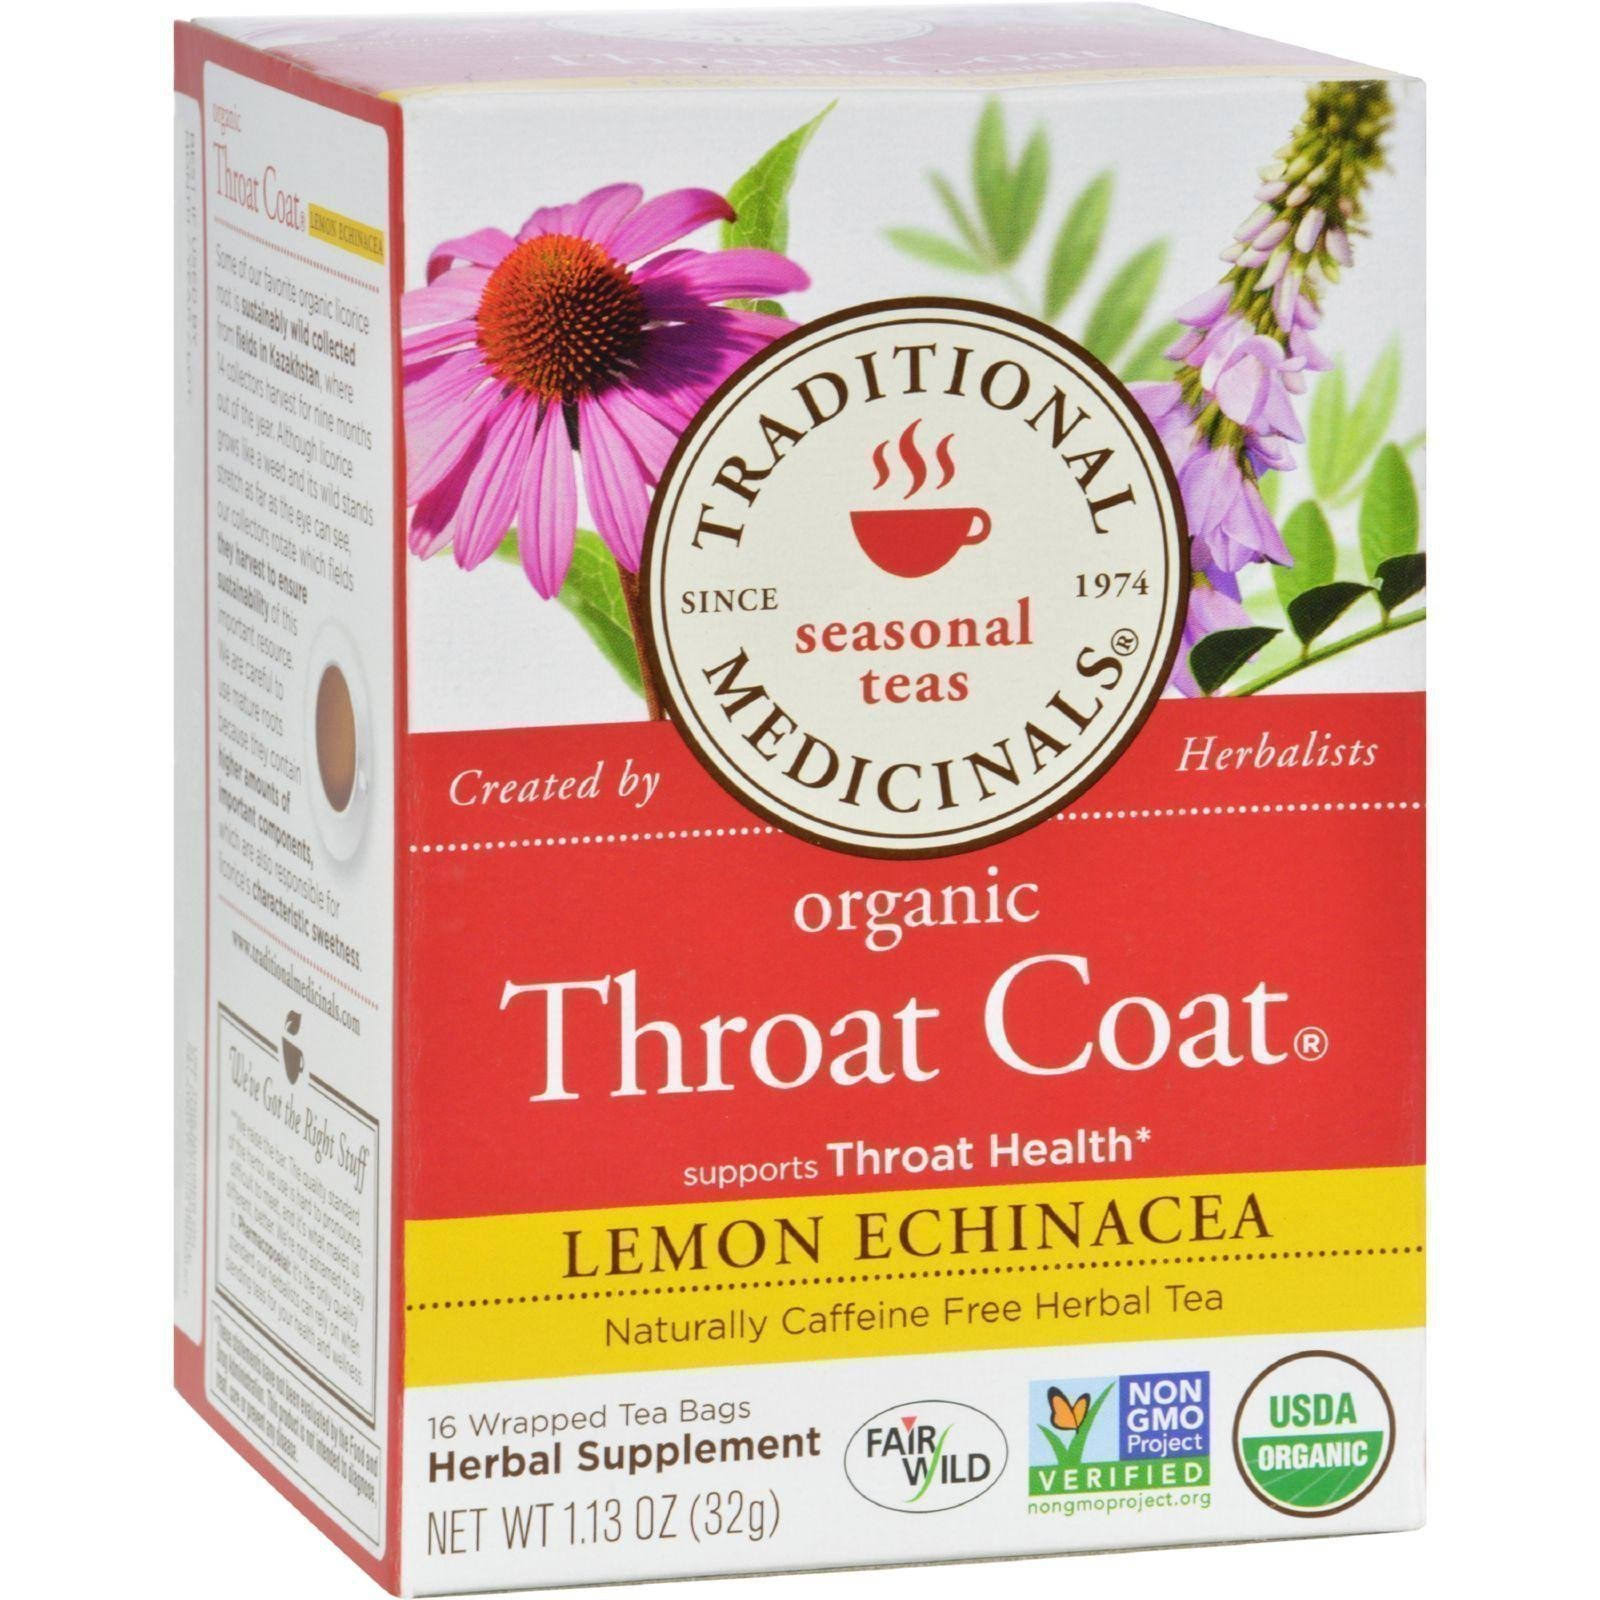 Traditional Medicinals Throat Coat Lemon Echinacea Tea - 16 Bags, 1.13oz